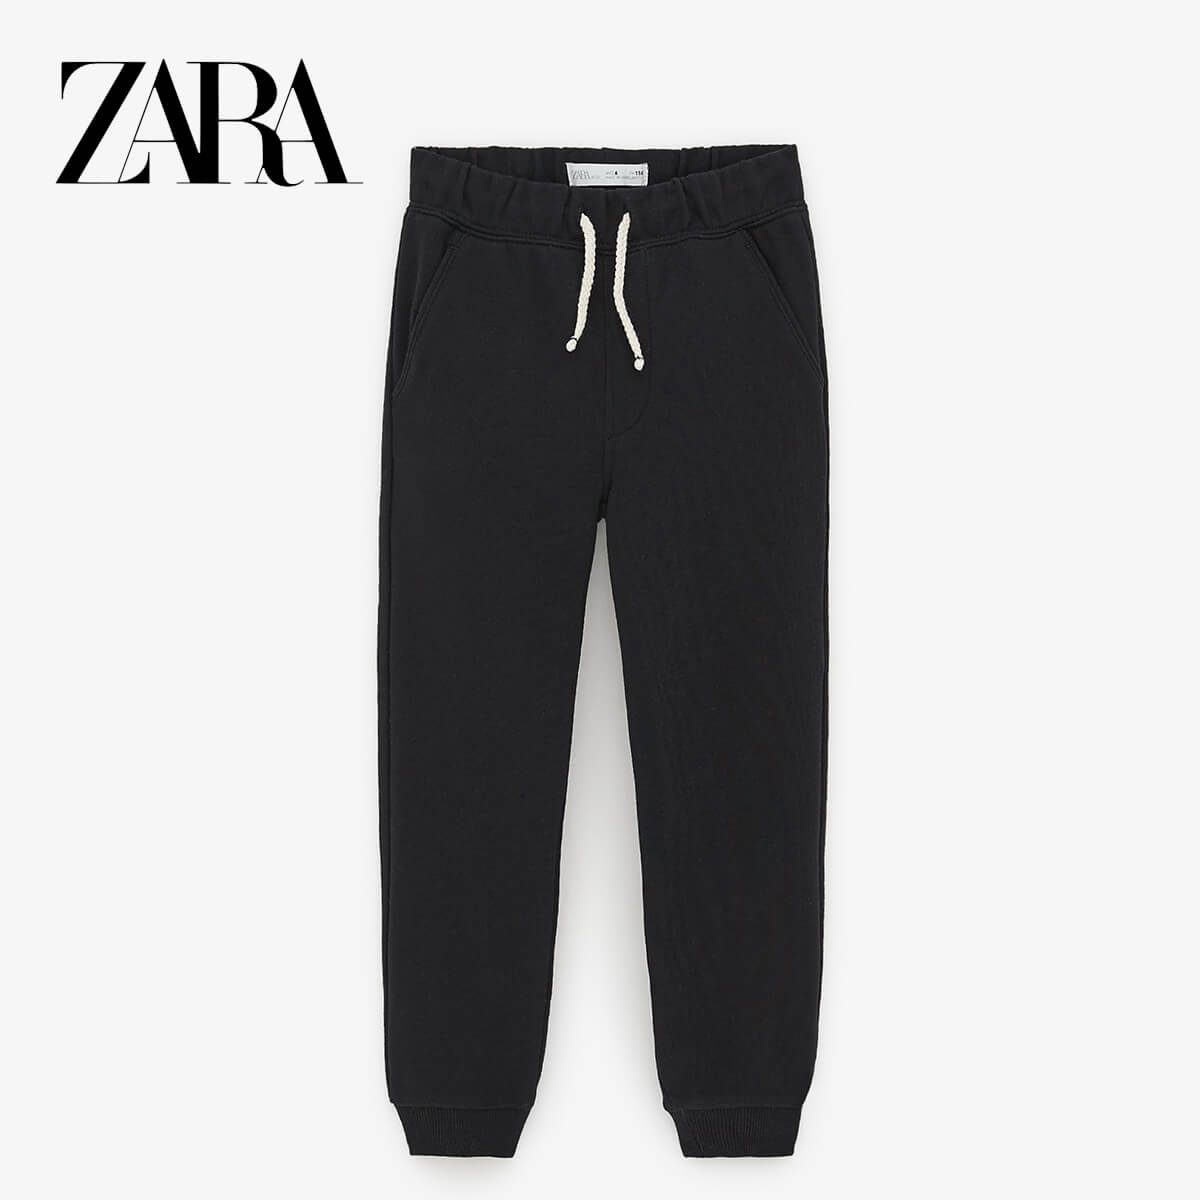 zara basics trousers